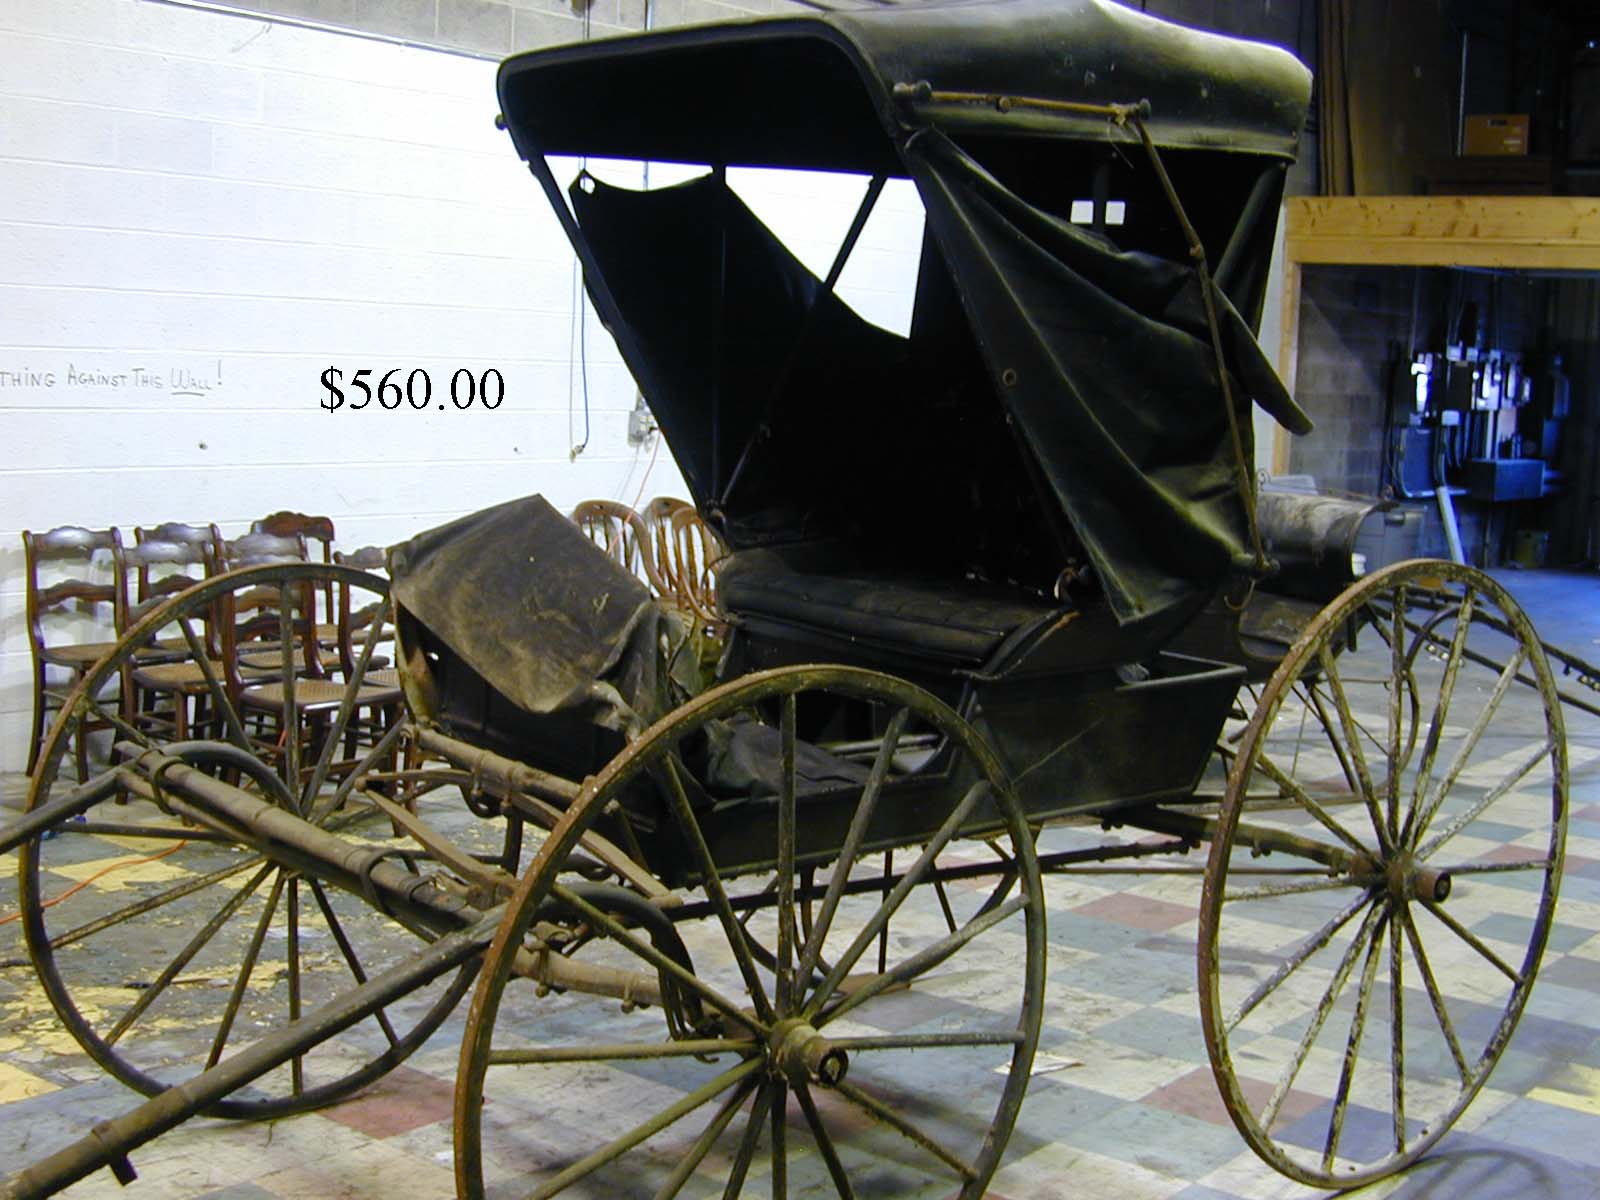 horse drawn buggy